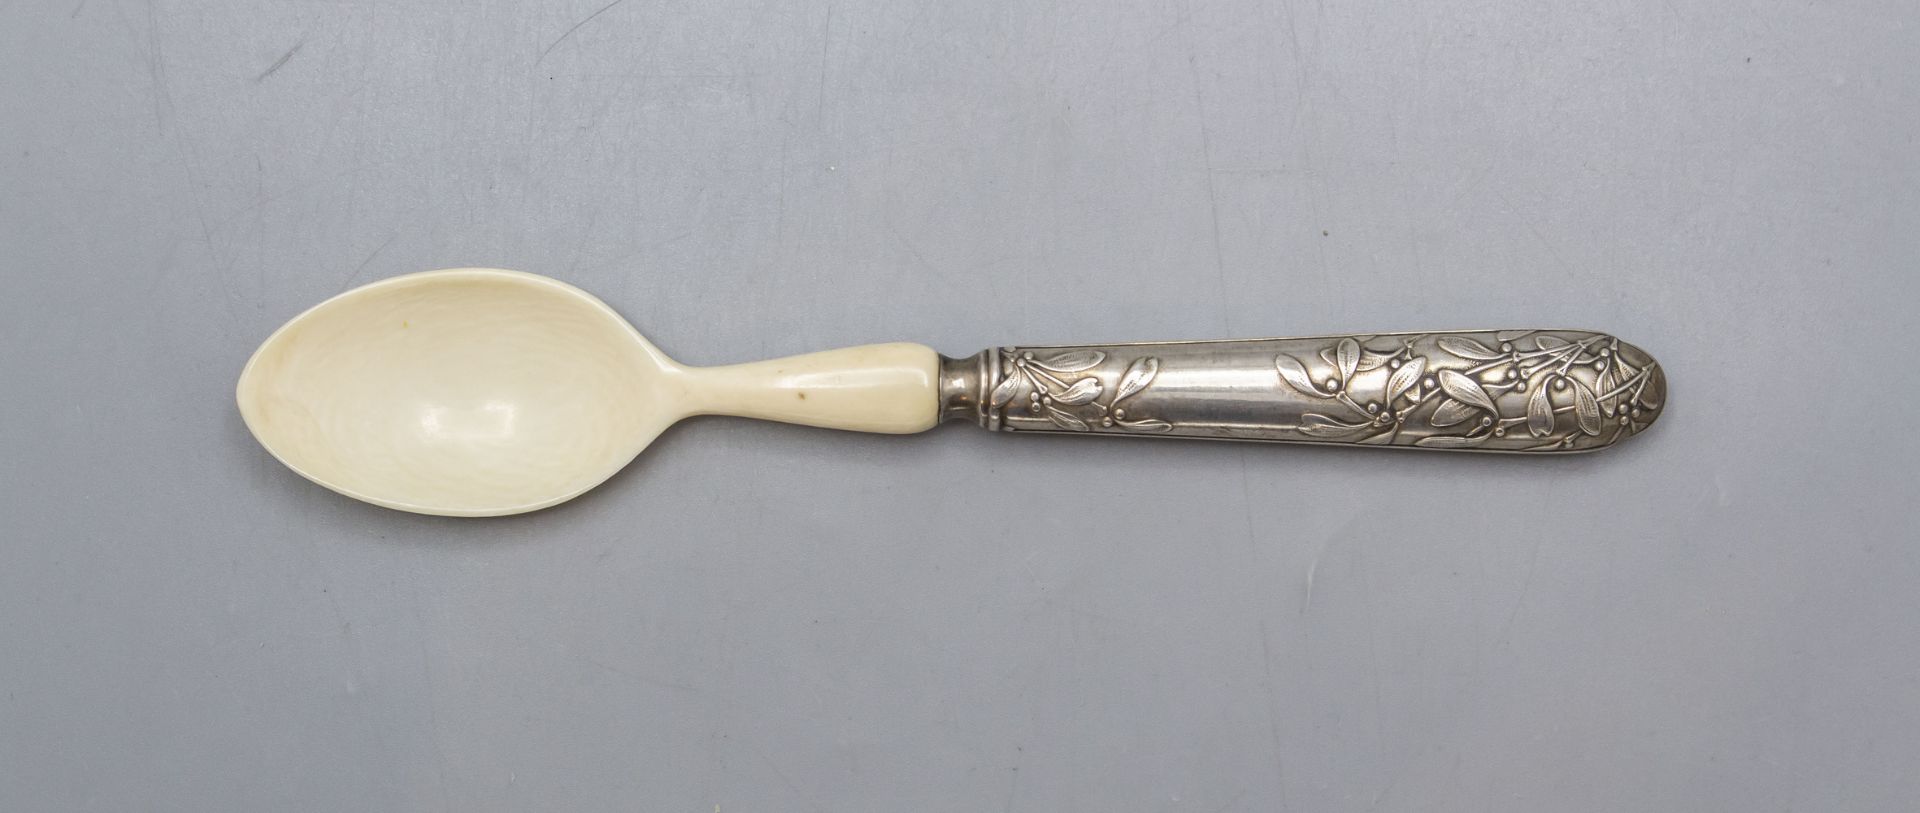 Jugendstil Löffel mit Misteldekor / An Art Nouveau spoon with mistletoe, Frankreich, um 1900